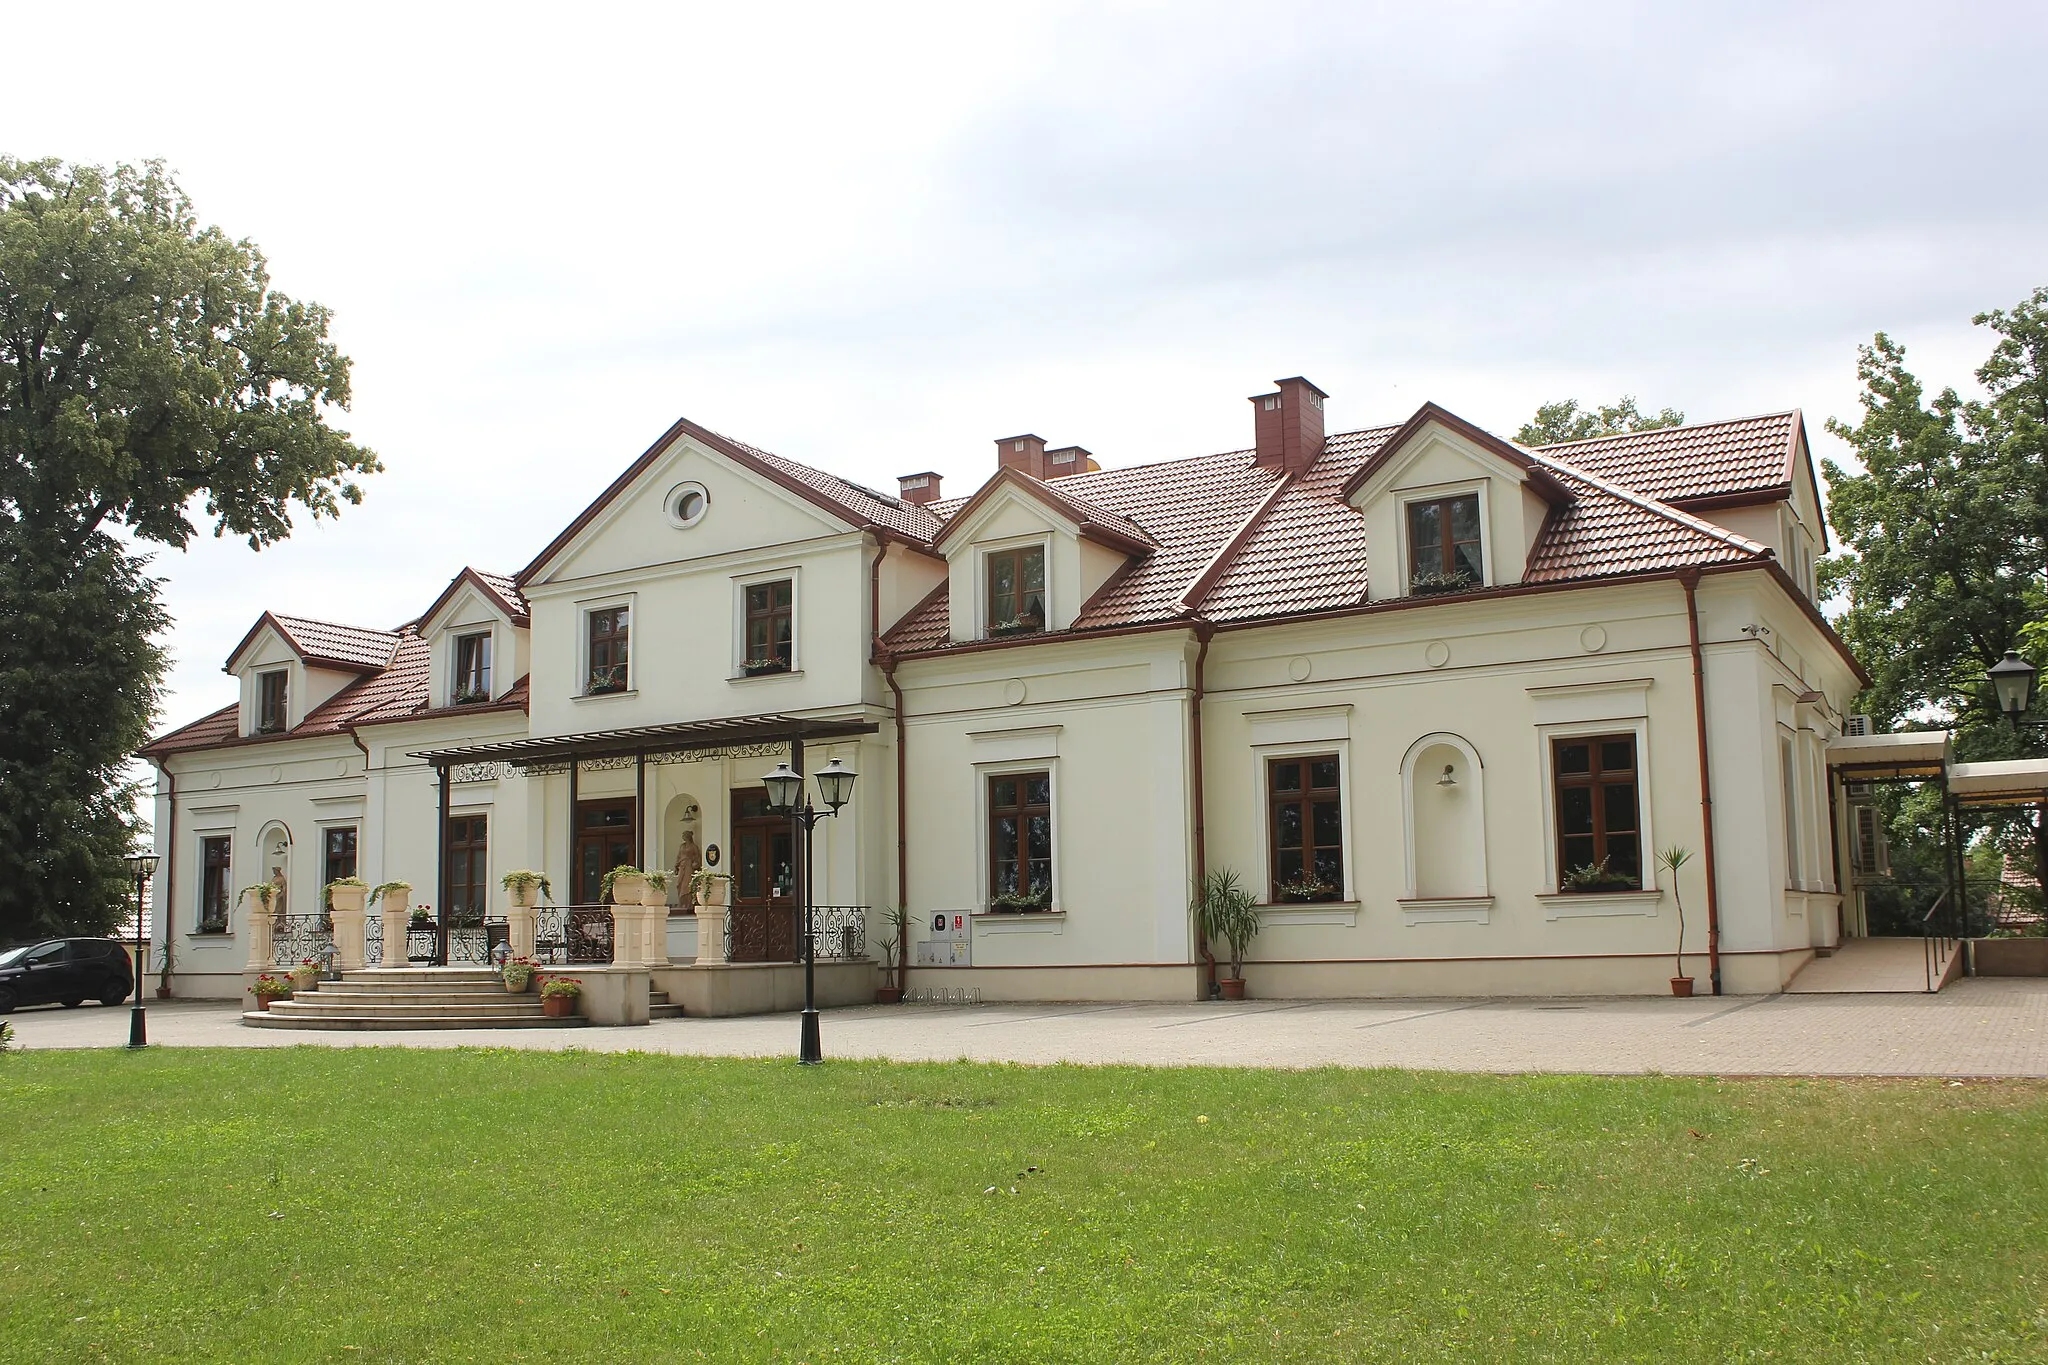 Photo showing: Zgłobice - manor